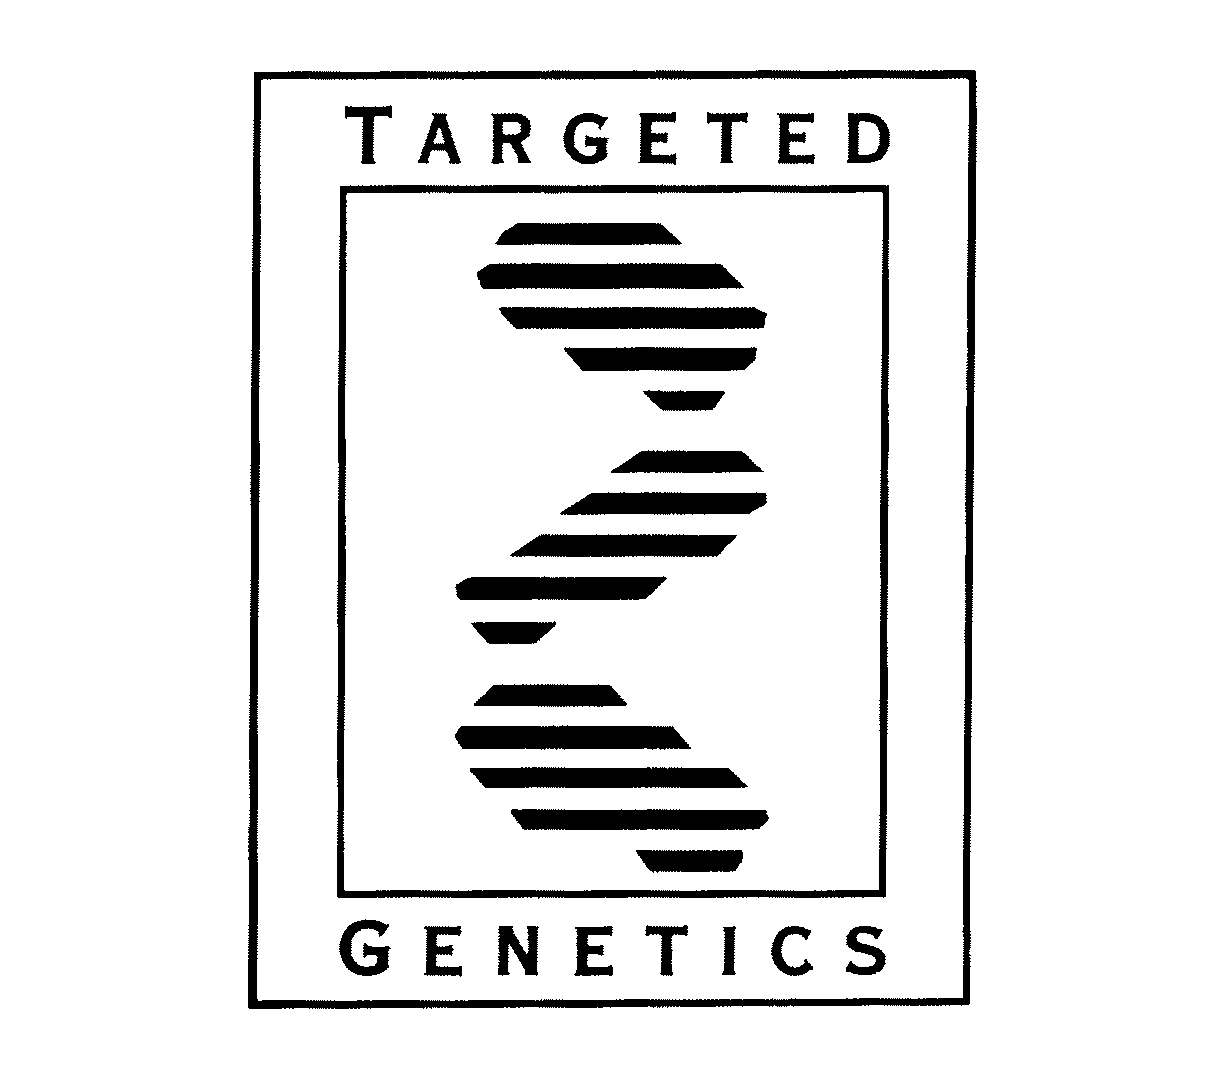  TARGETED GENETICS